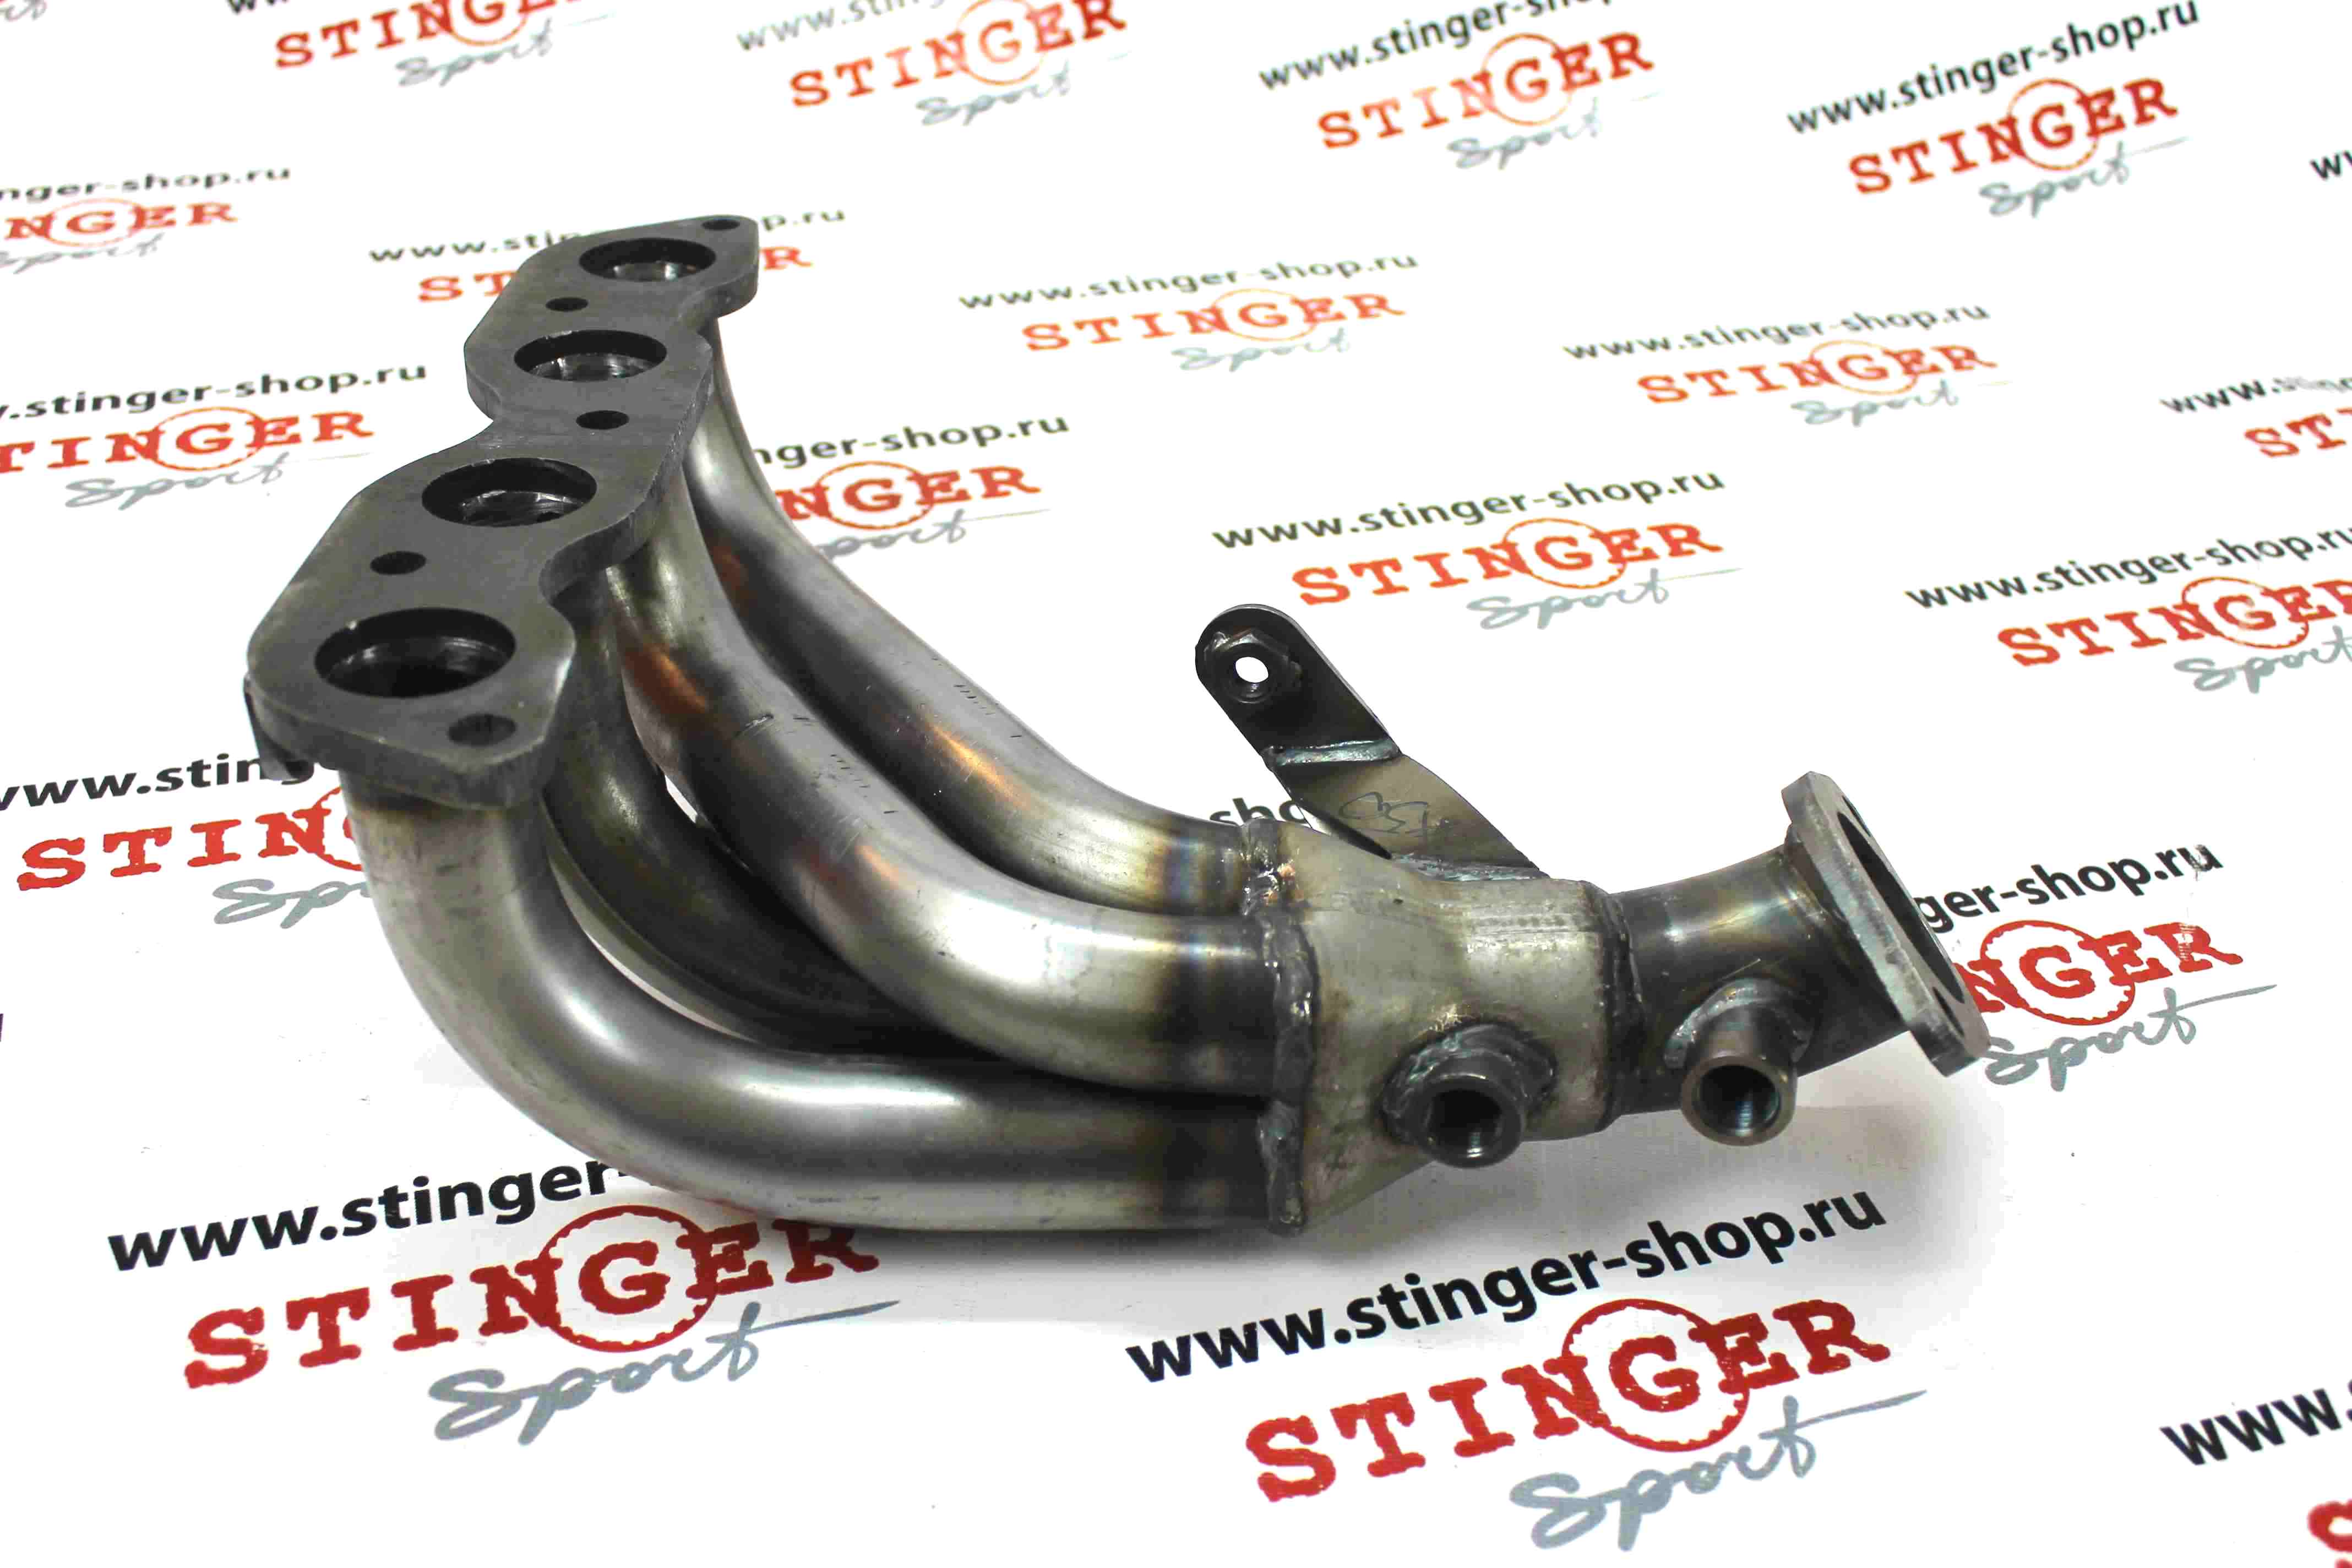 Вставка для замены катализатора Stinger Sport  для  Lifan X50 1.5L (103 л.с.) (2015-2020). Фото �5